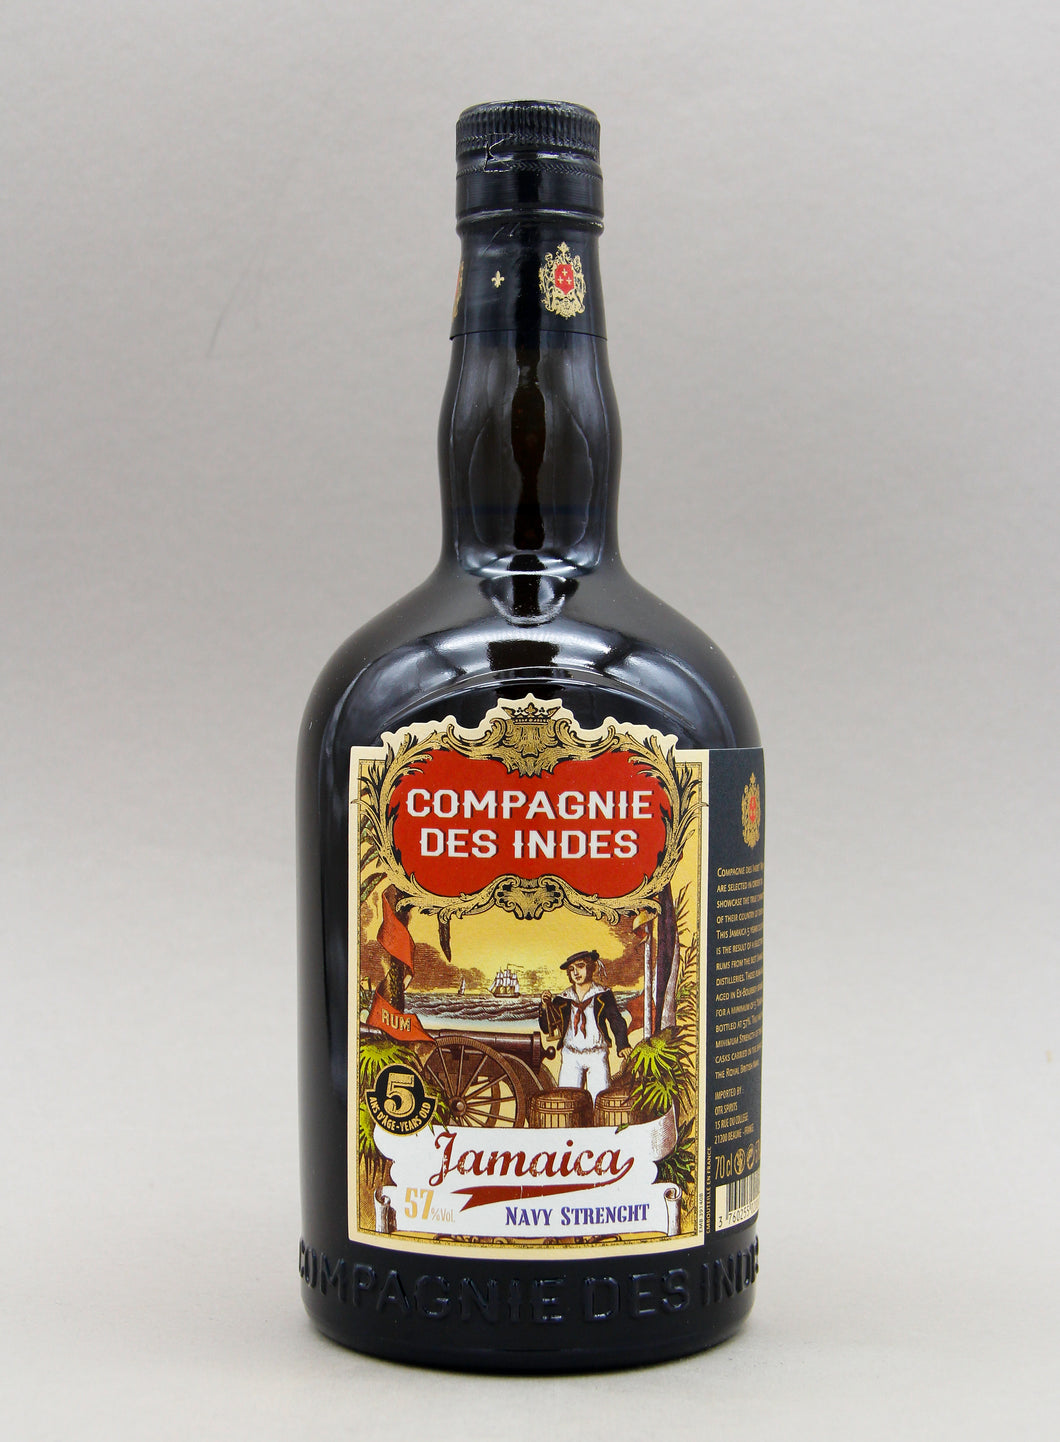 Compagnie Des Indes Jamaica 5 Years, Navy Strength Rum (57%, 70cl)